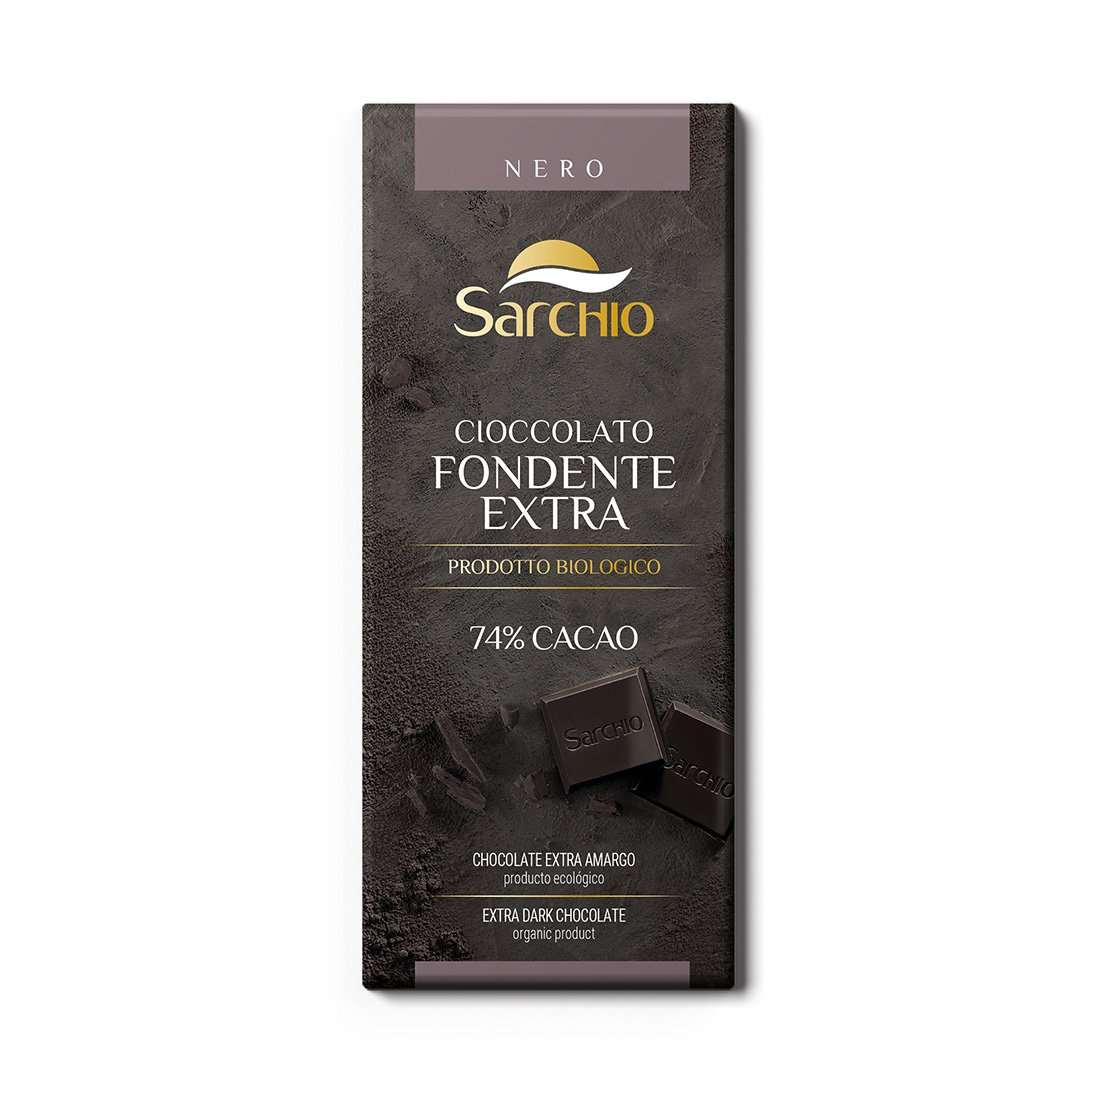 Extra dark chocolate